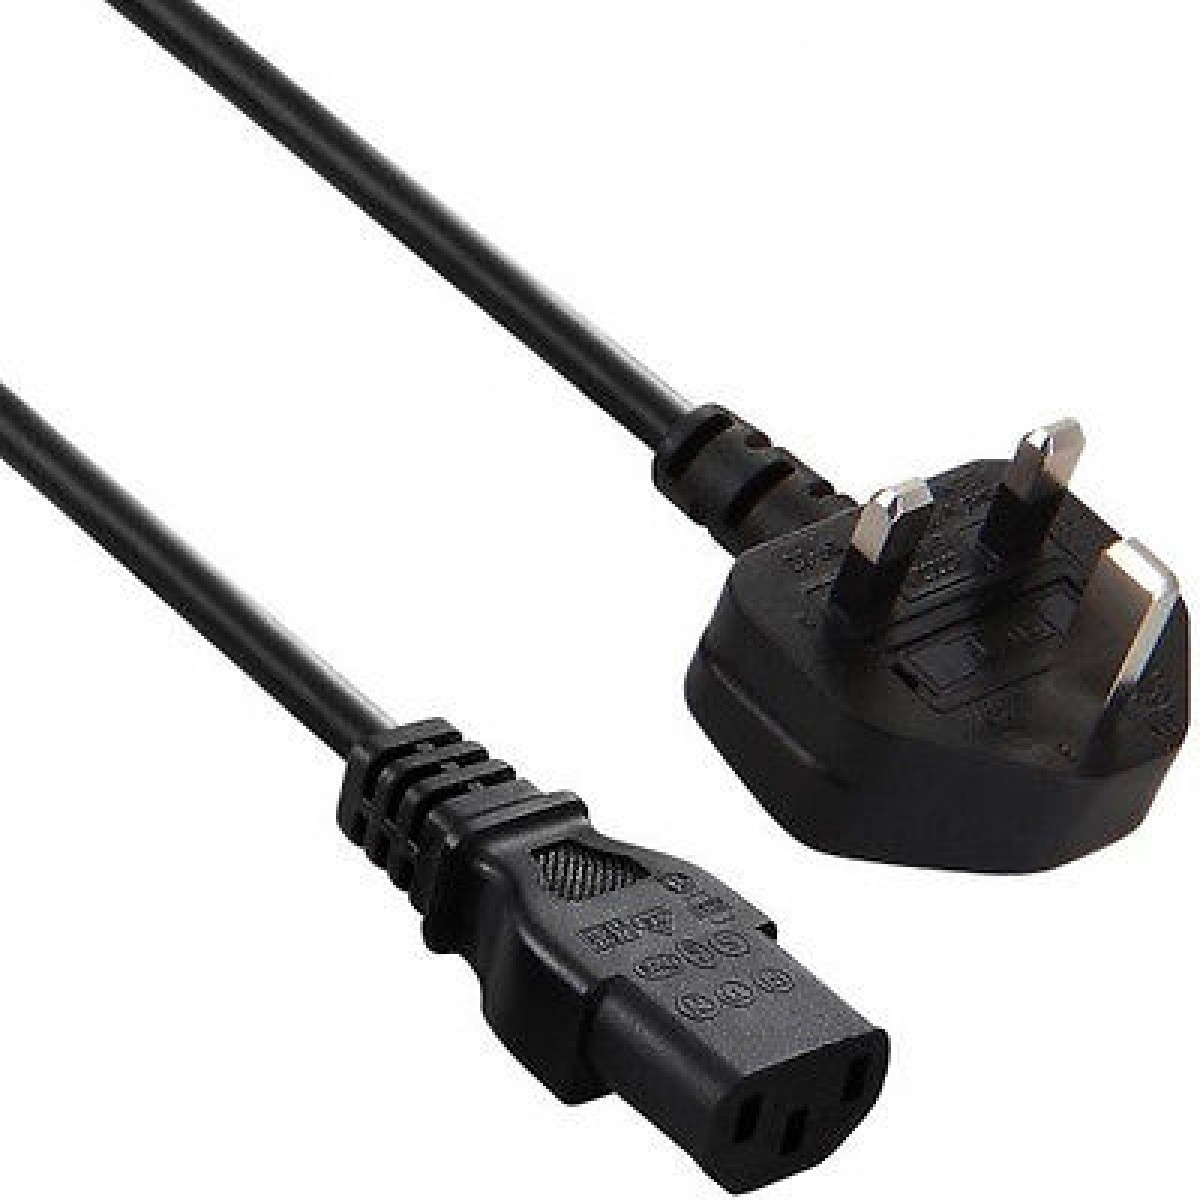 Uk Ac Adapter Power Cord For Lg 42lh3000 Za Aekdljg Tv Keple Com